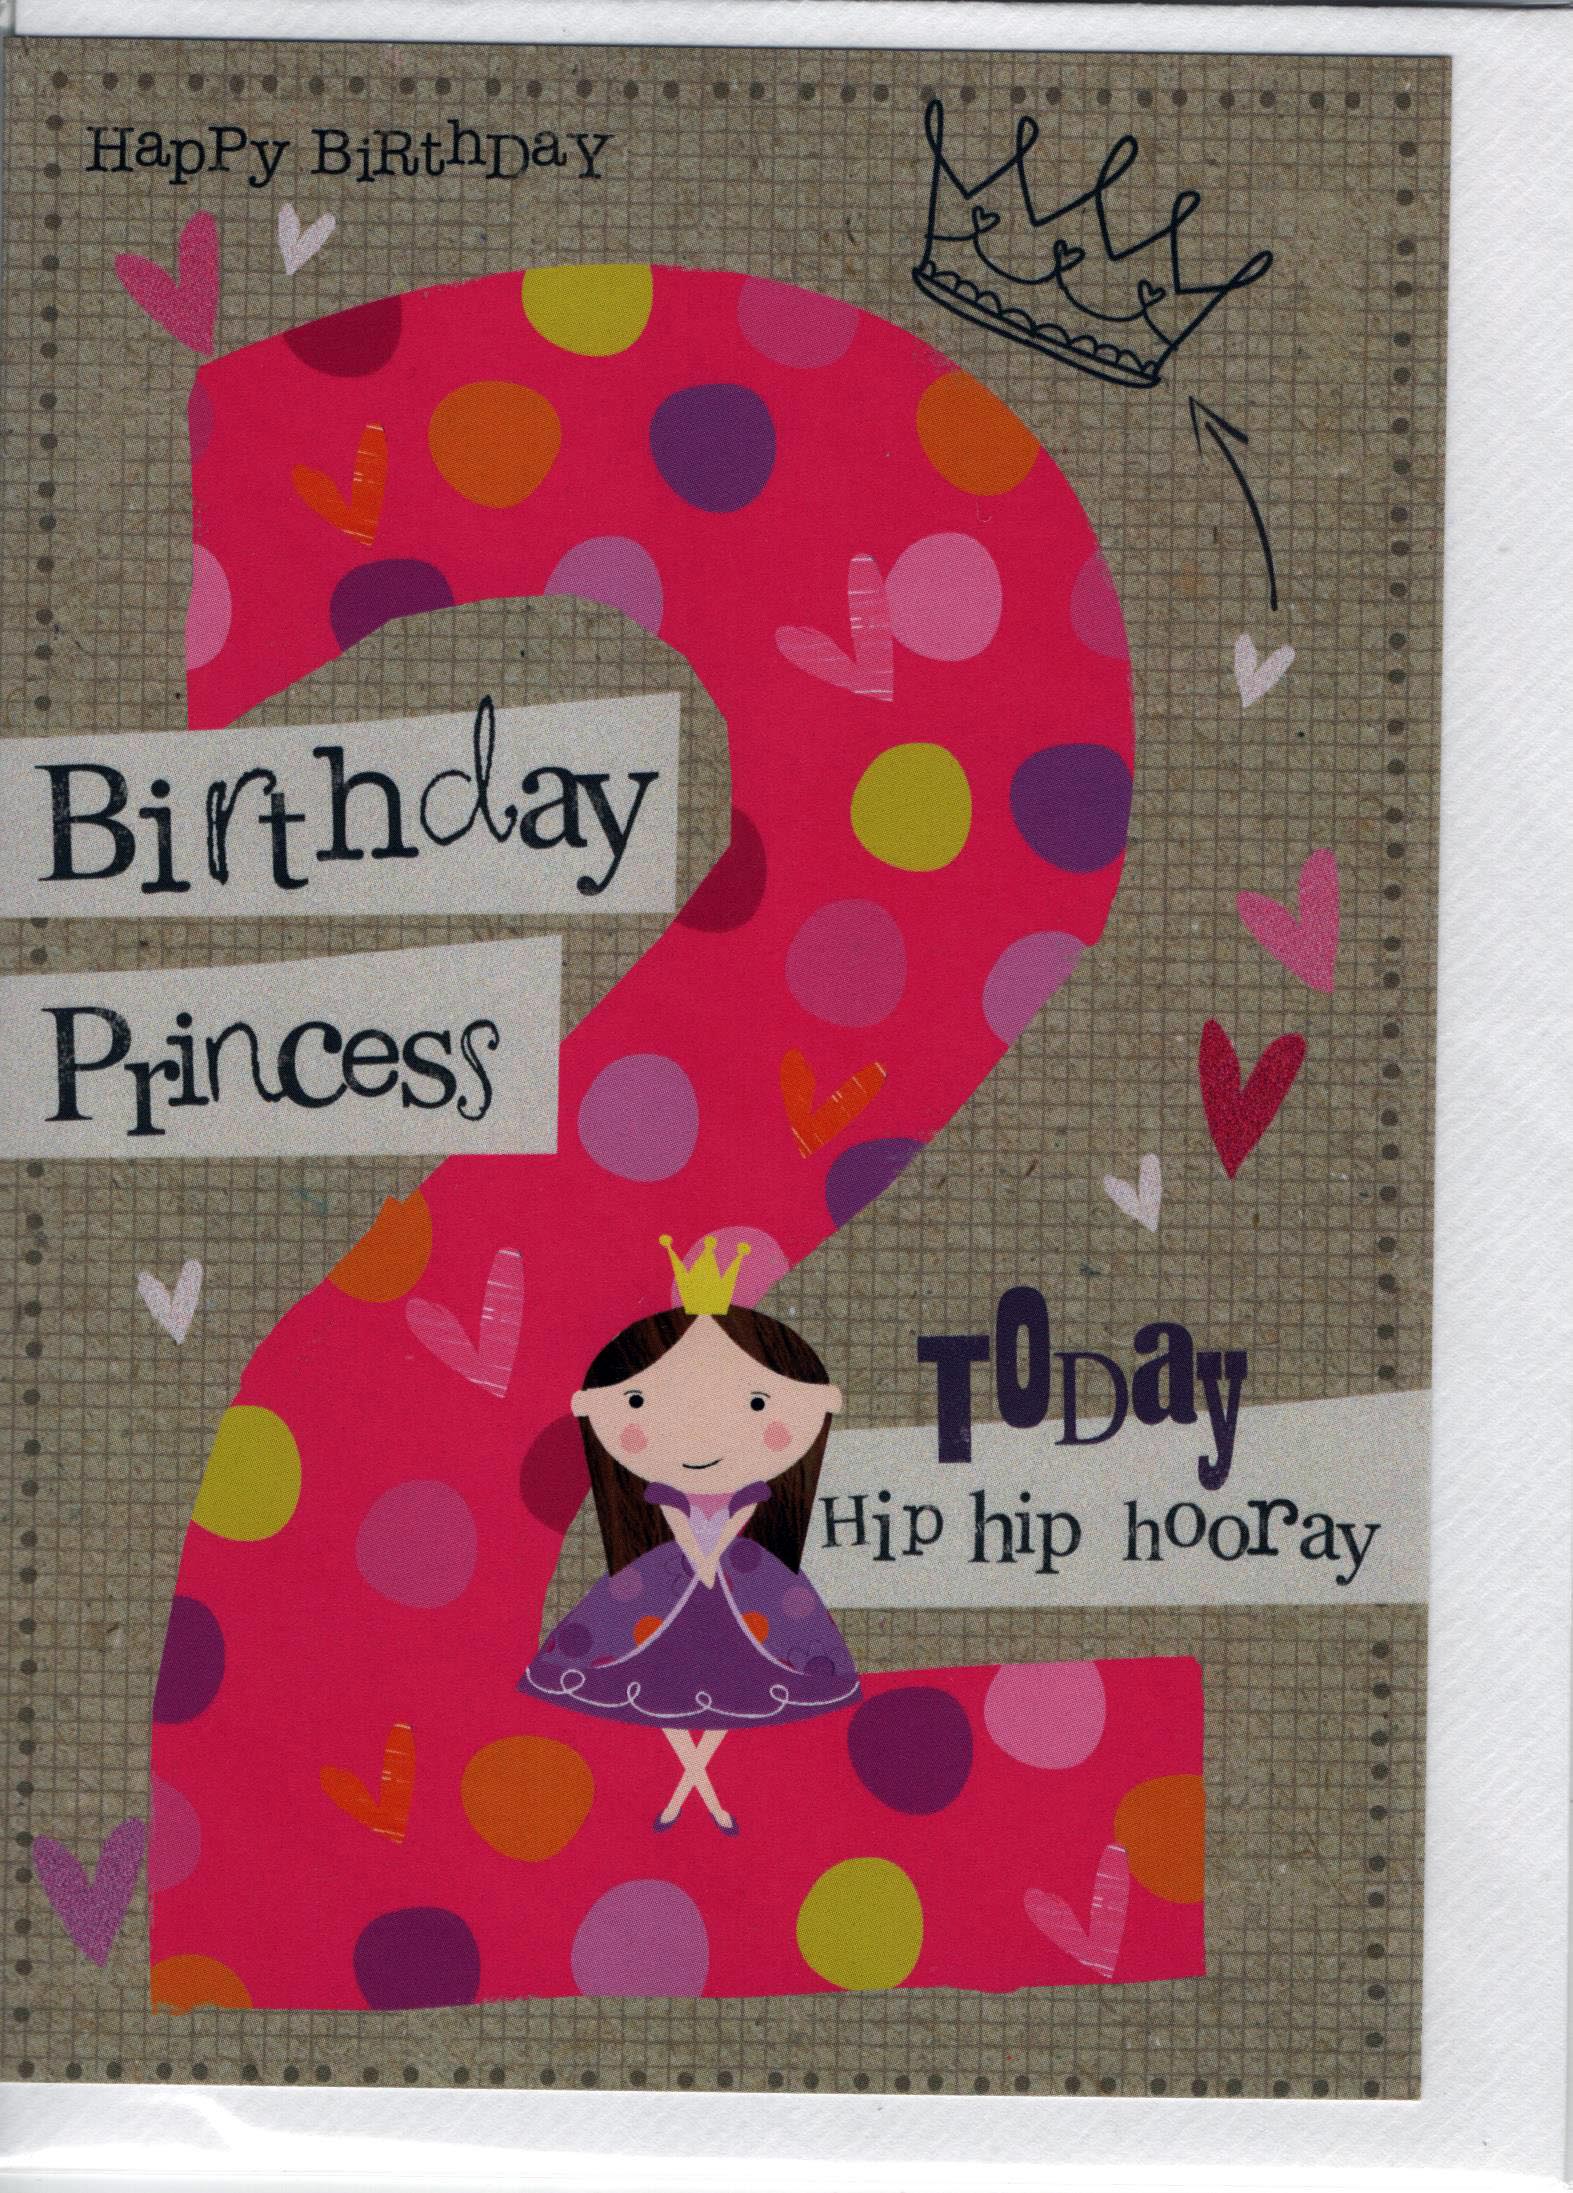 Happy Birthday Birthday Princess 2 today Hip Hip Hooray